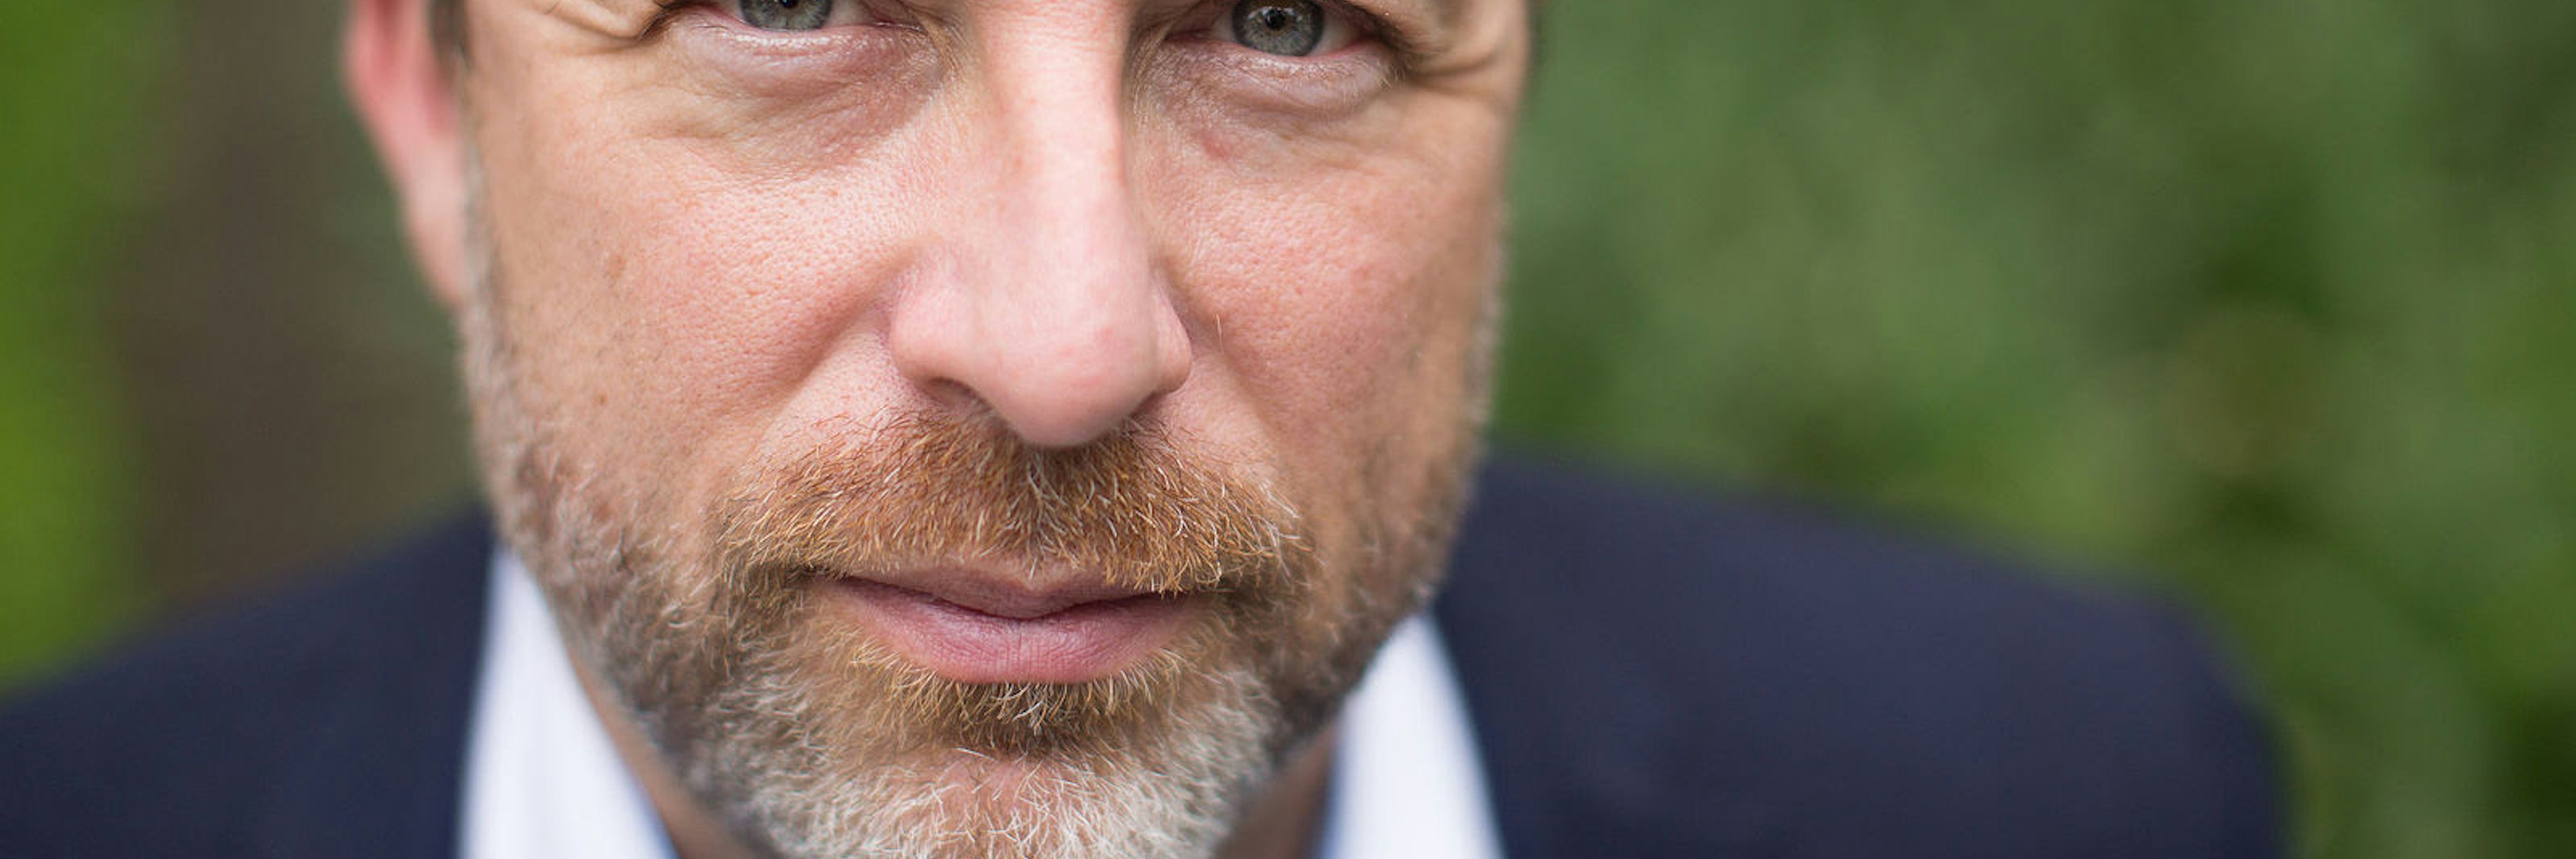 Headshot of Jimmy Wales, founder of Wikipedia